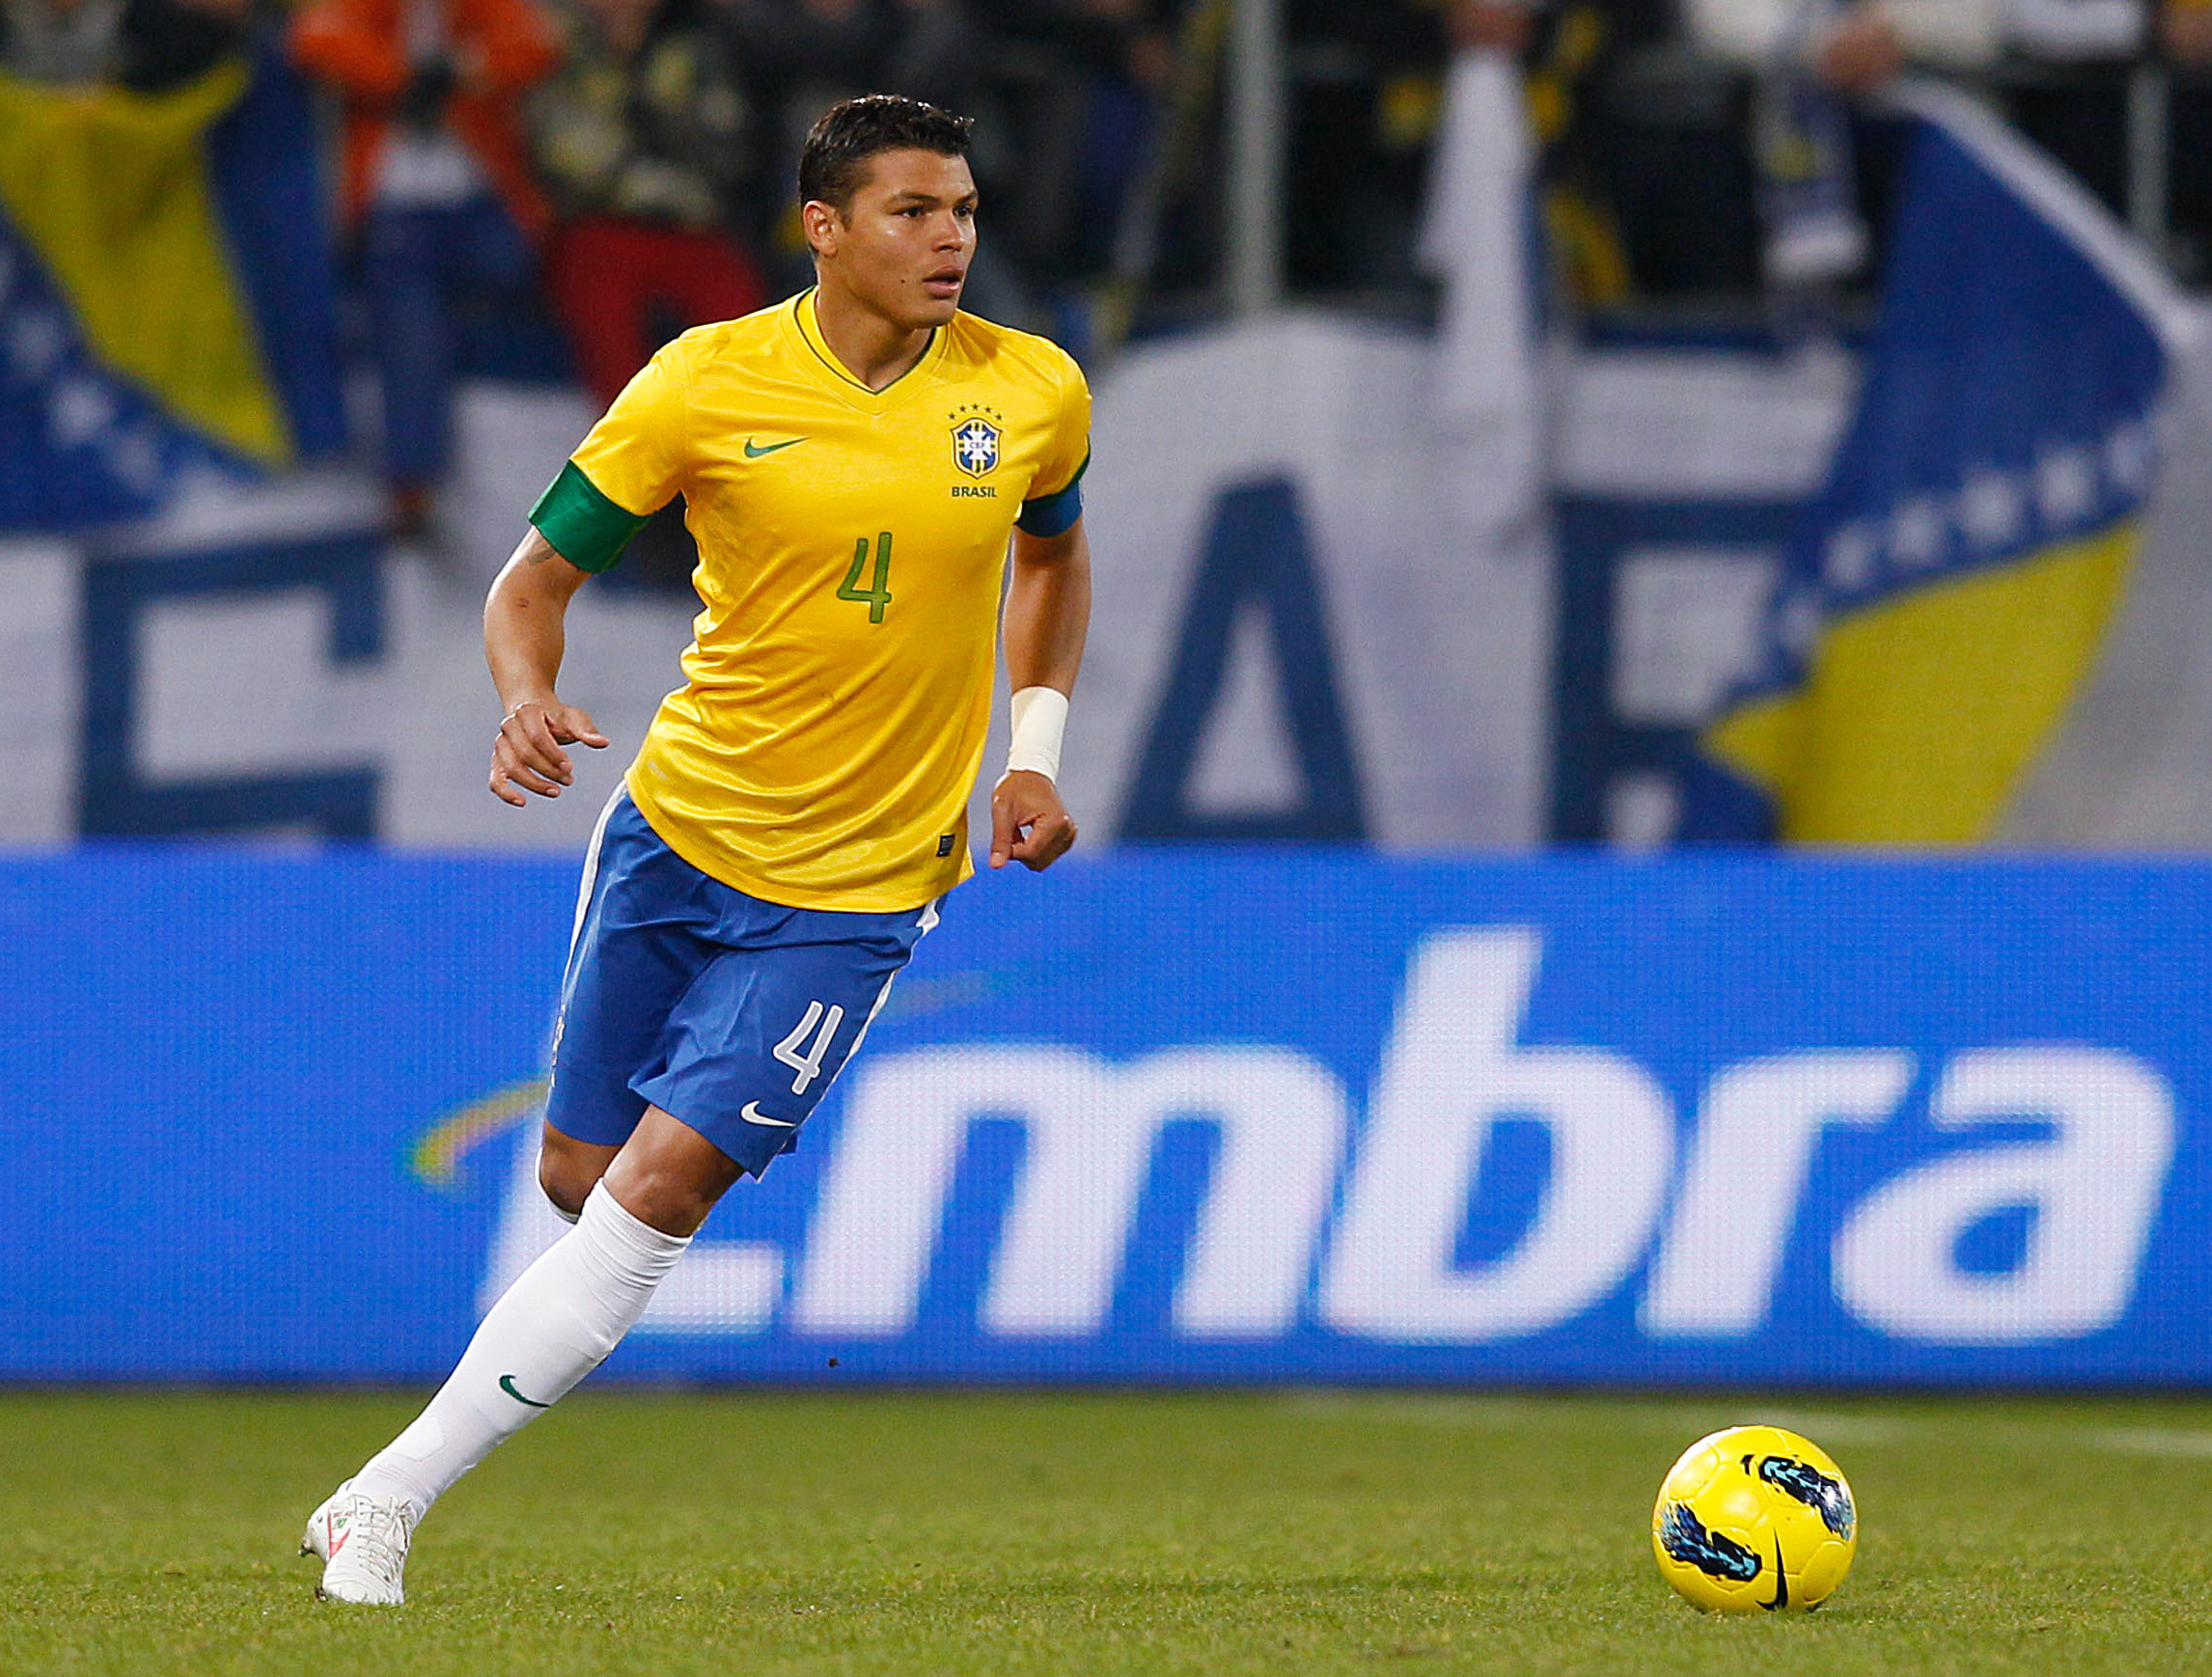 Thiago Silva Football Soccer Player Kick Ball To Goal Free Hd Mobile Desktop Background Download Wallpaper Images